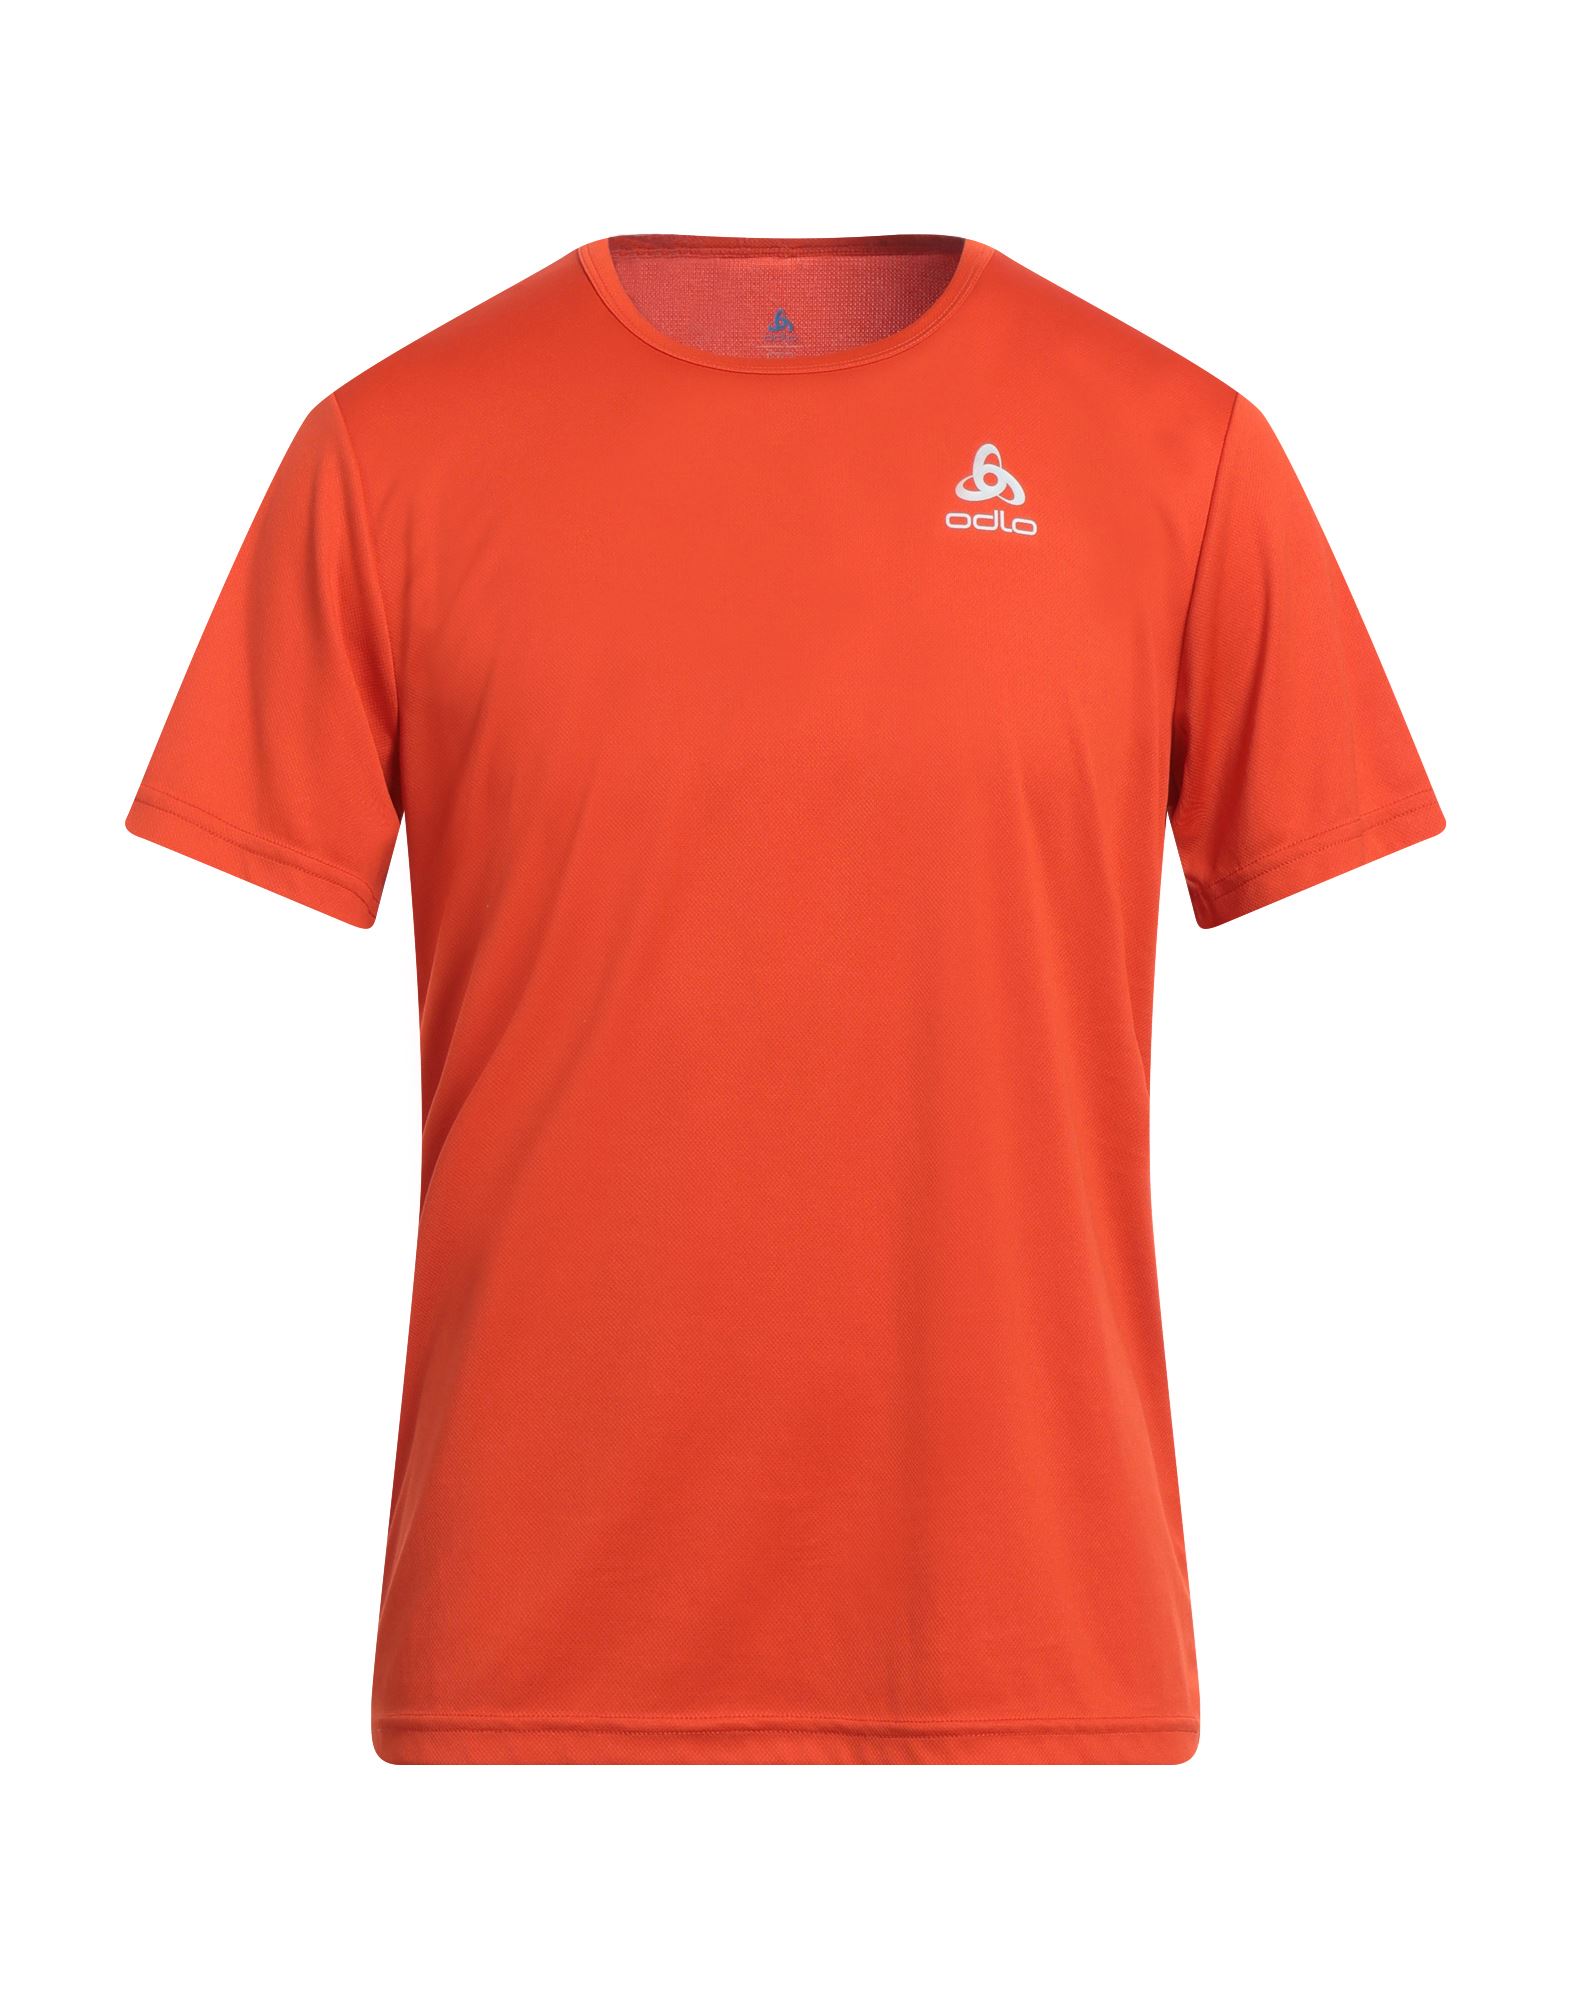 Odlo T-shirts In Orange